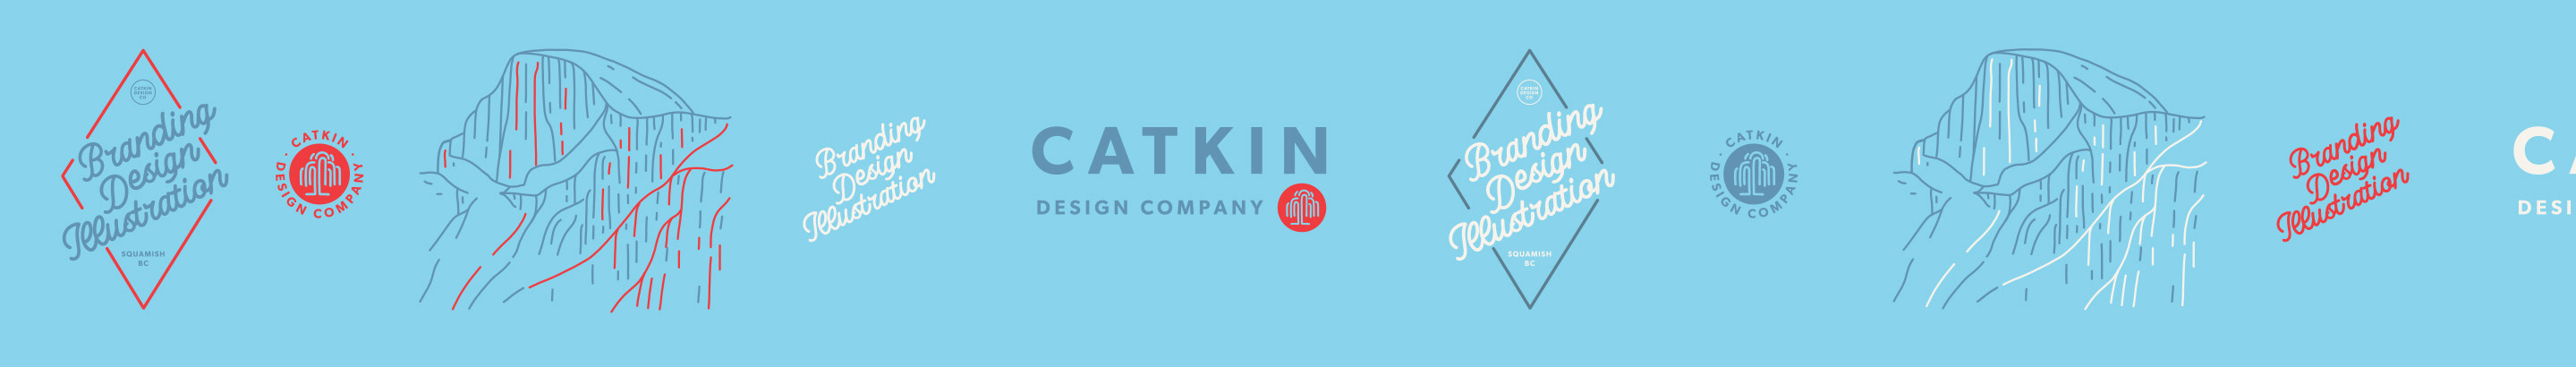 Banner de perfil de CATKIN DESIGN CO.